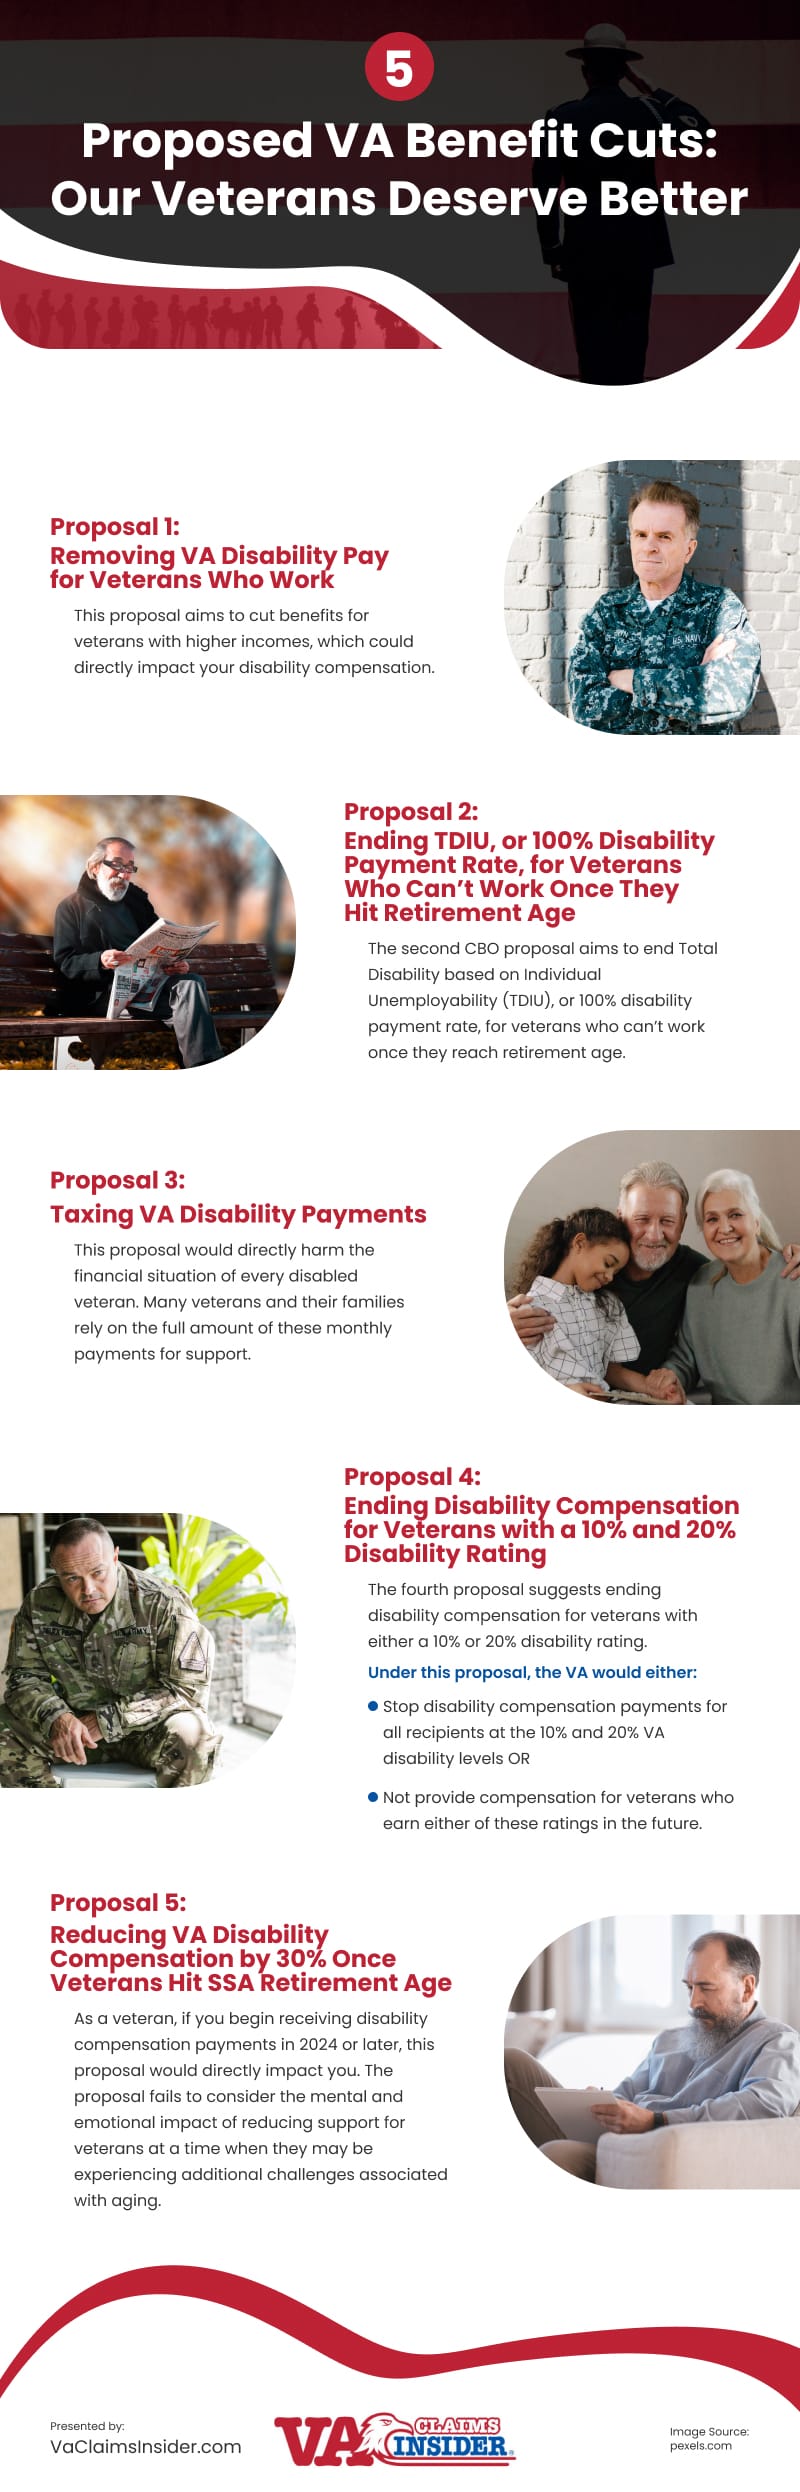 5 Proposed VA Benefit Cuts: Our Veterans Deserve Better Infographic